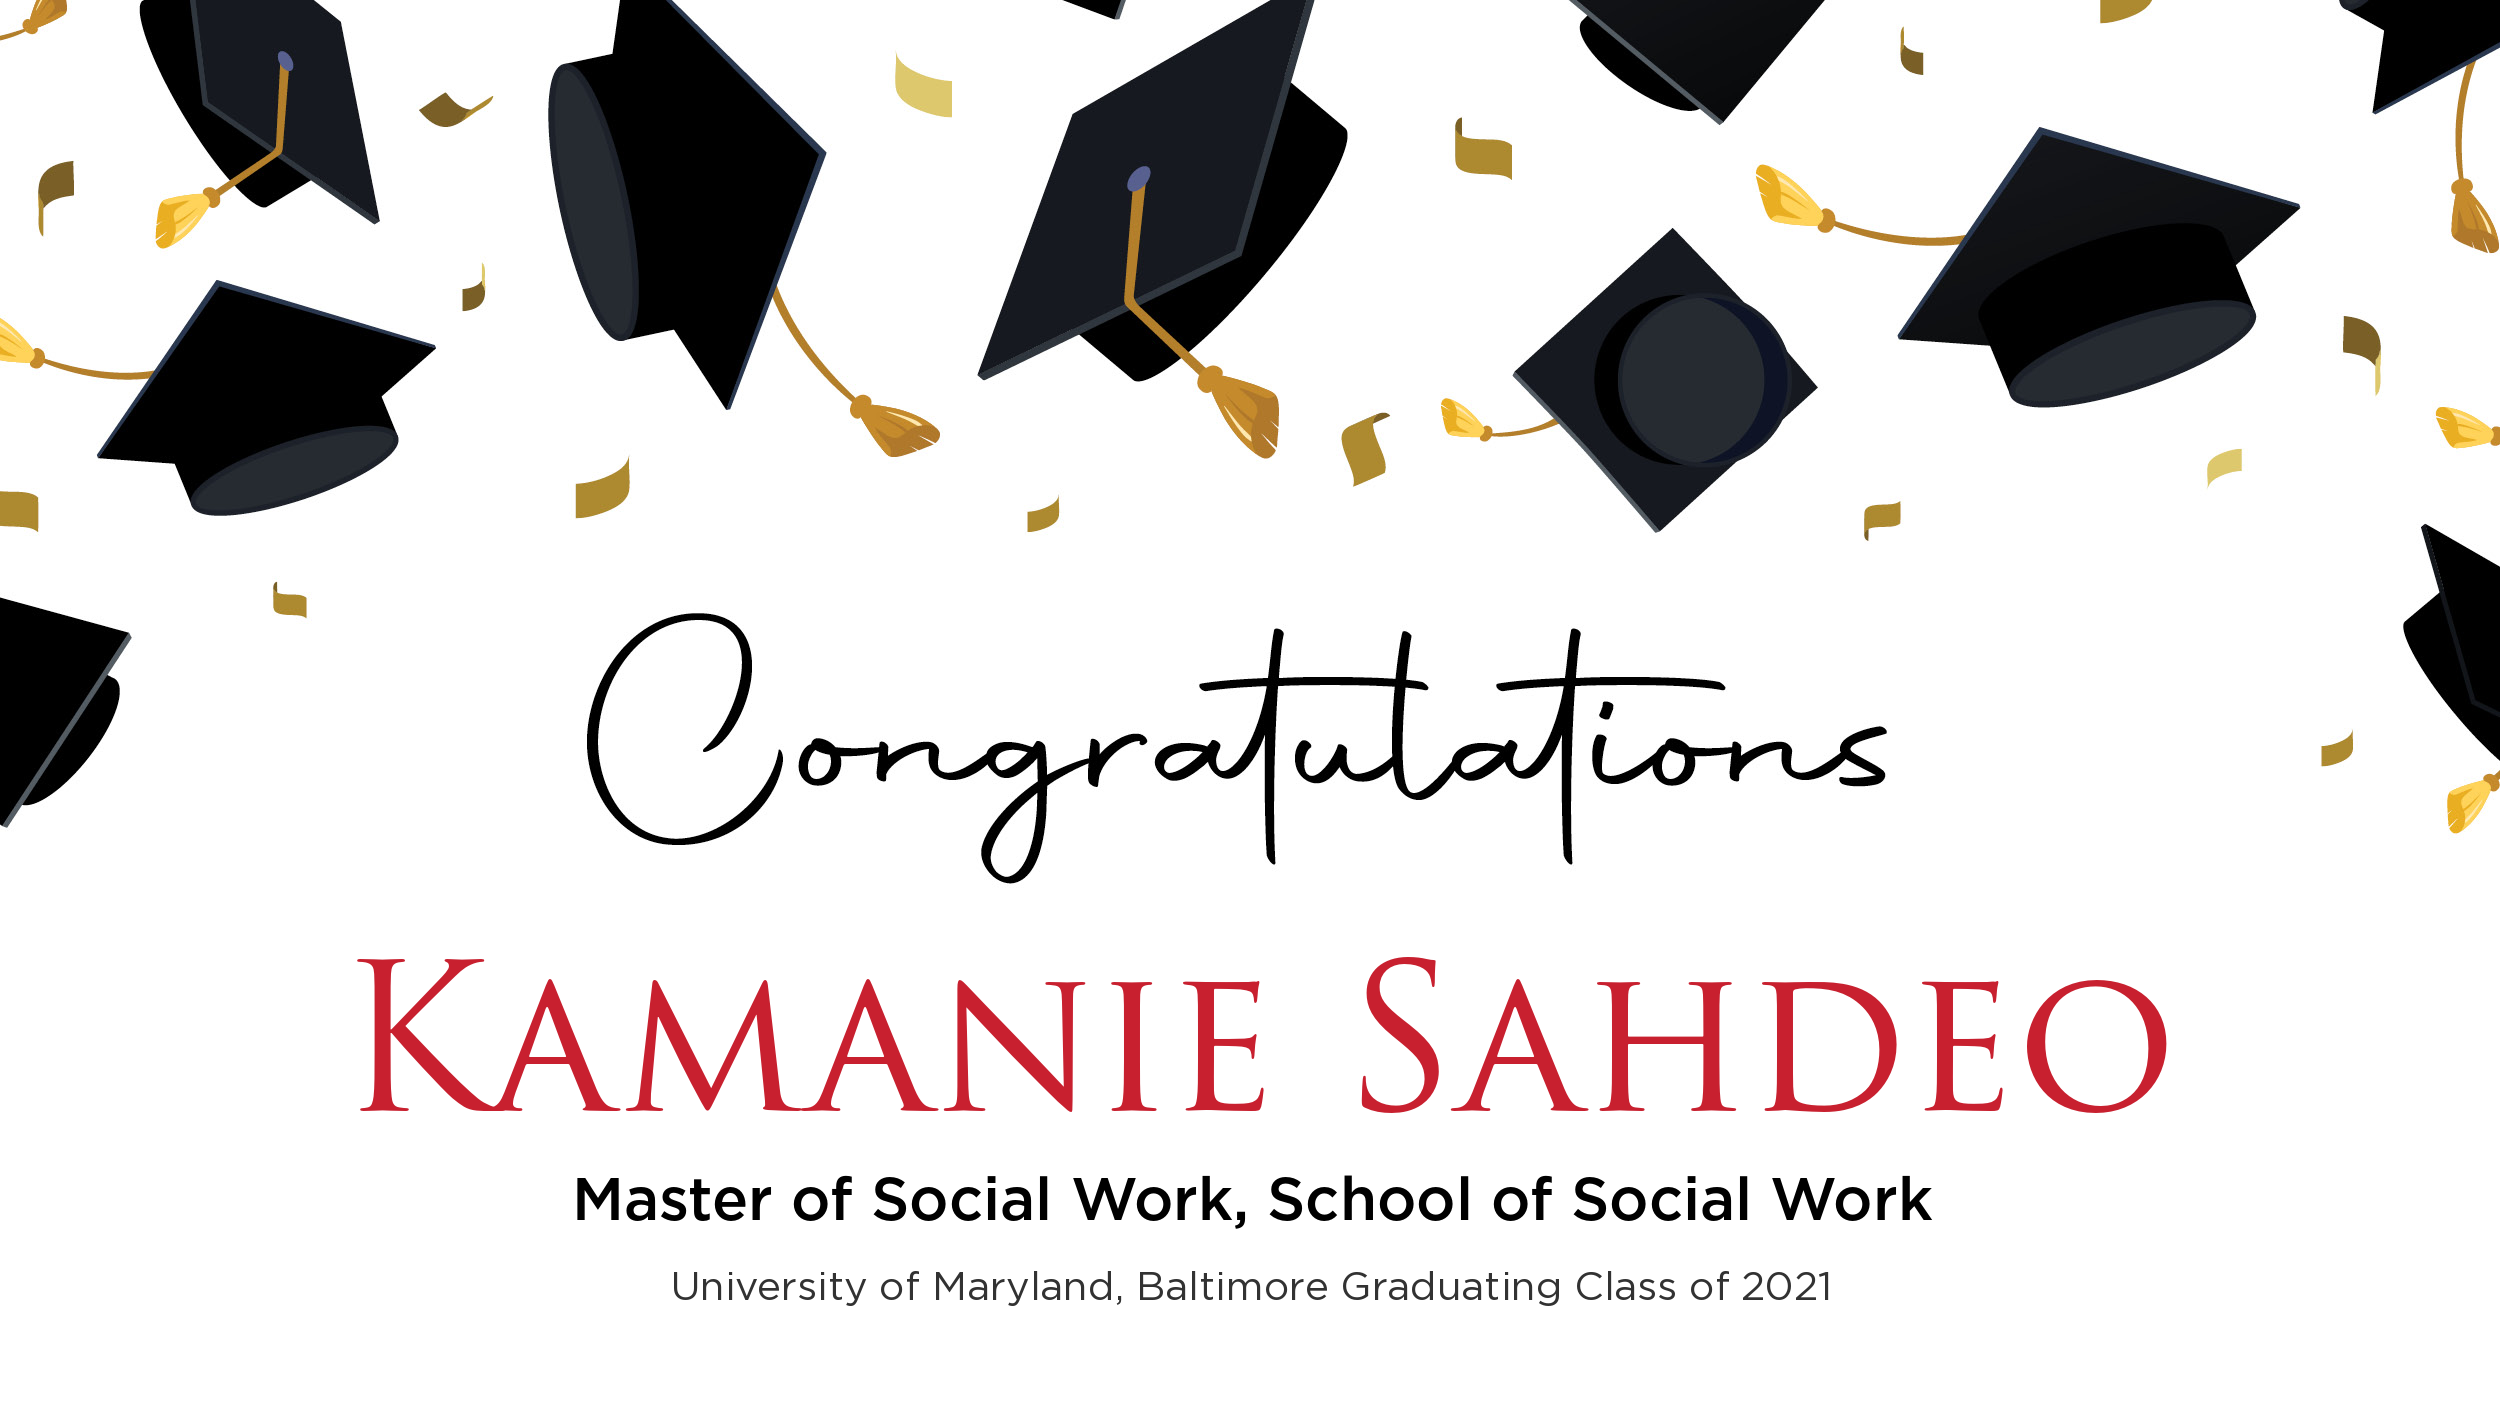 Congratulations Kamanie Sahdeo, Master of Social Work